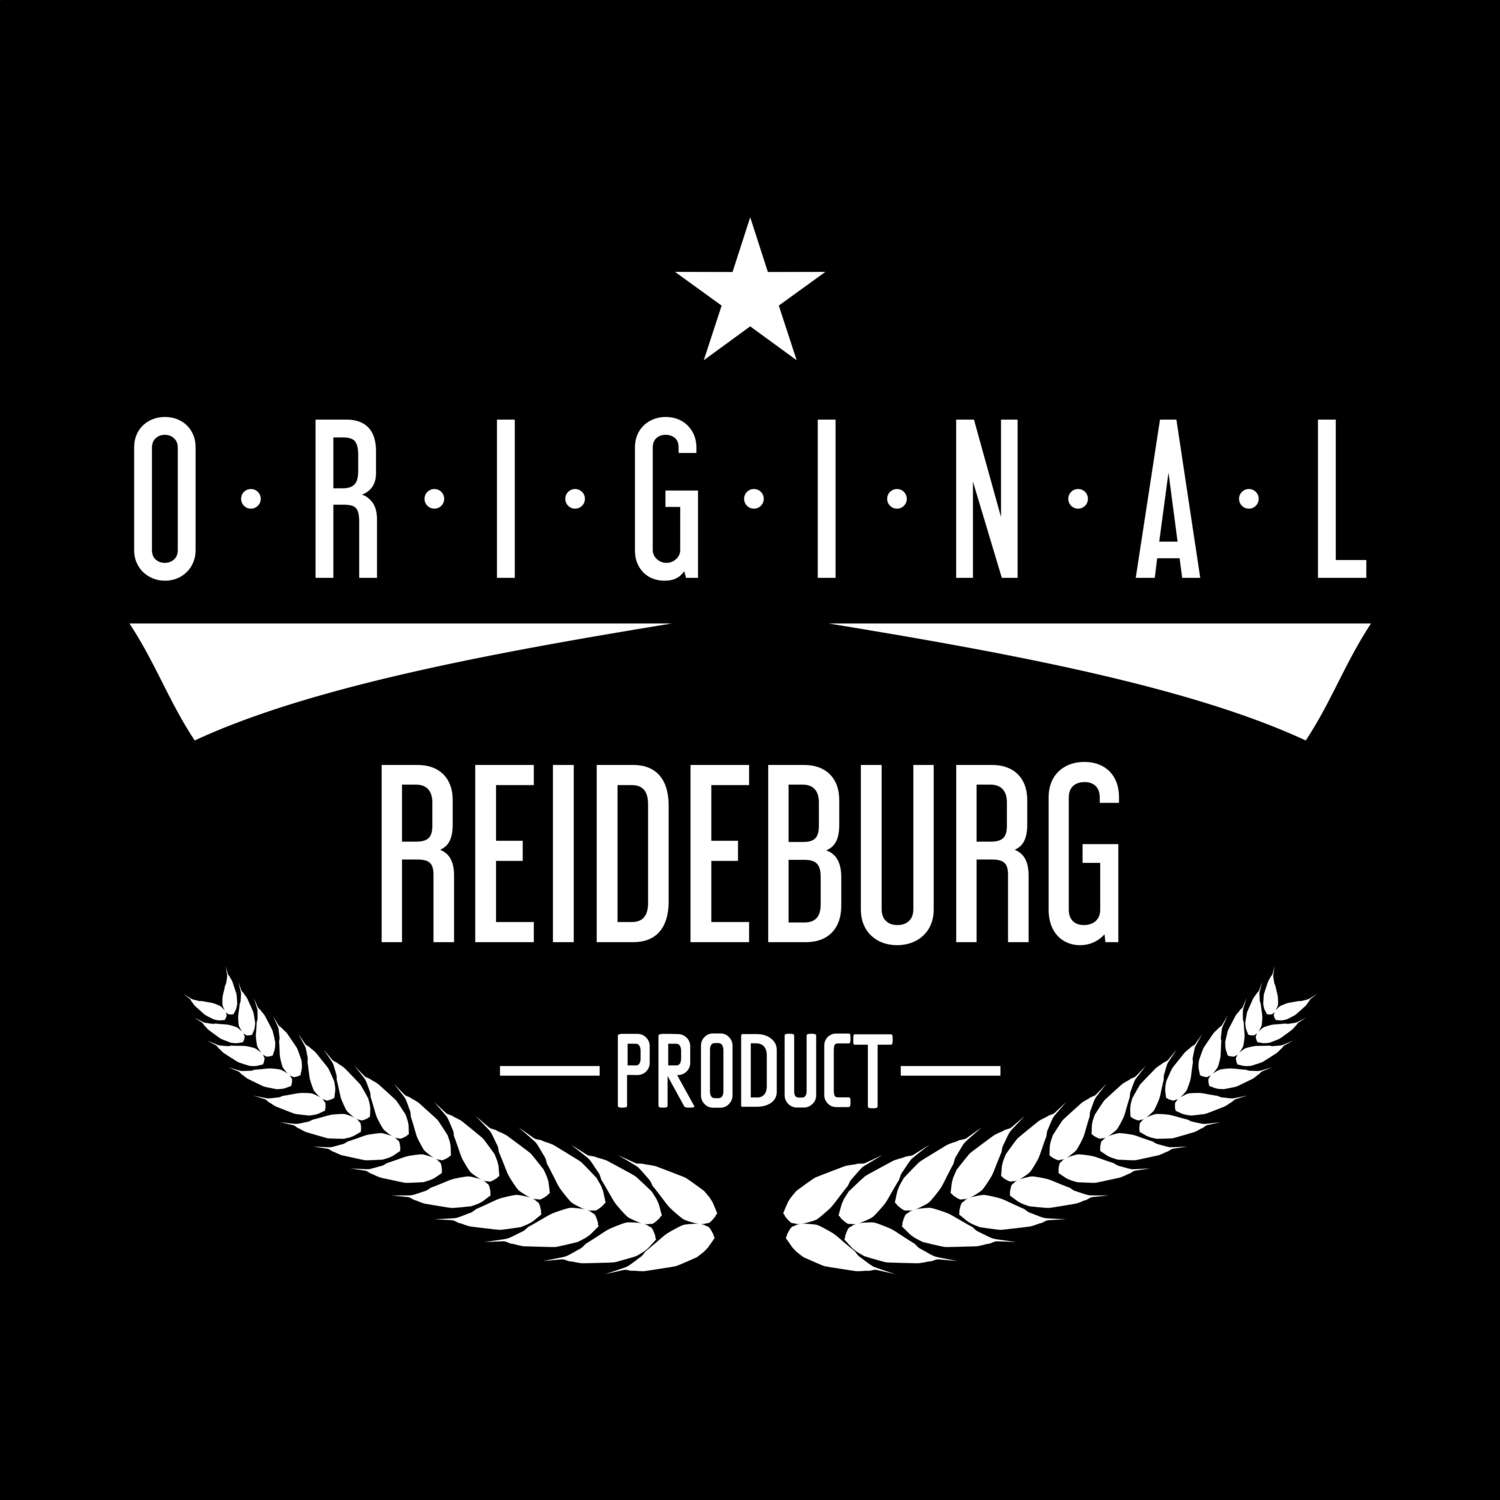 Reideburg T-Shirt »Original Product«